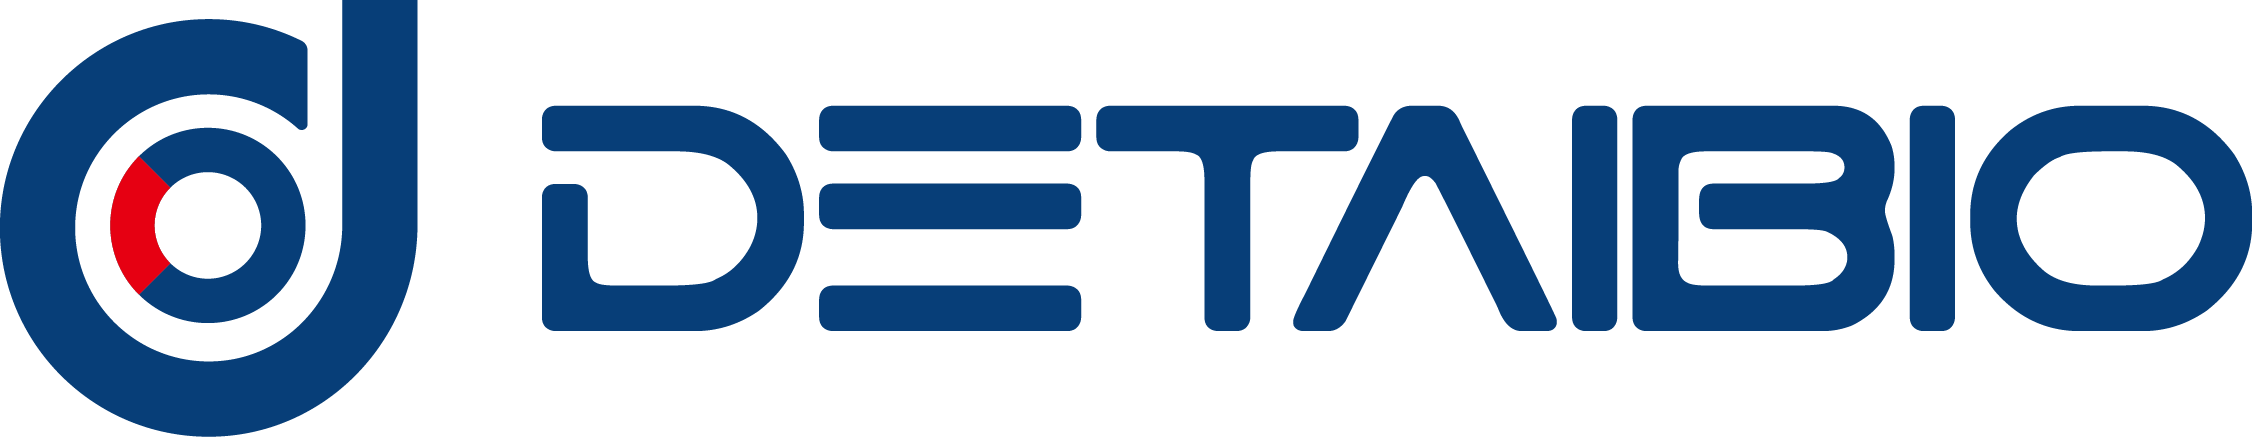 detaibio logo